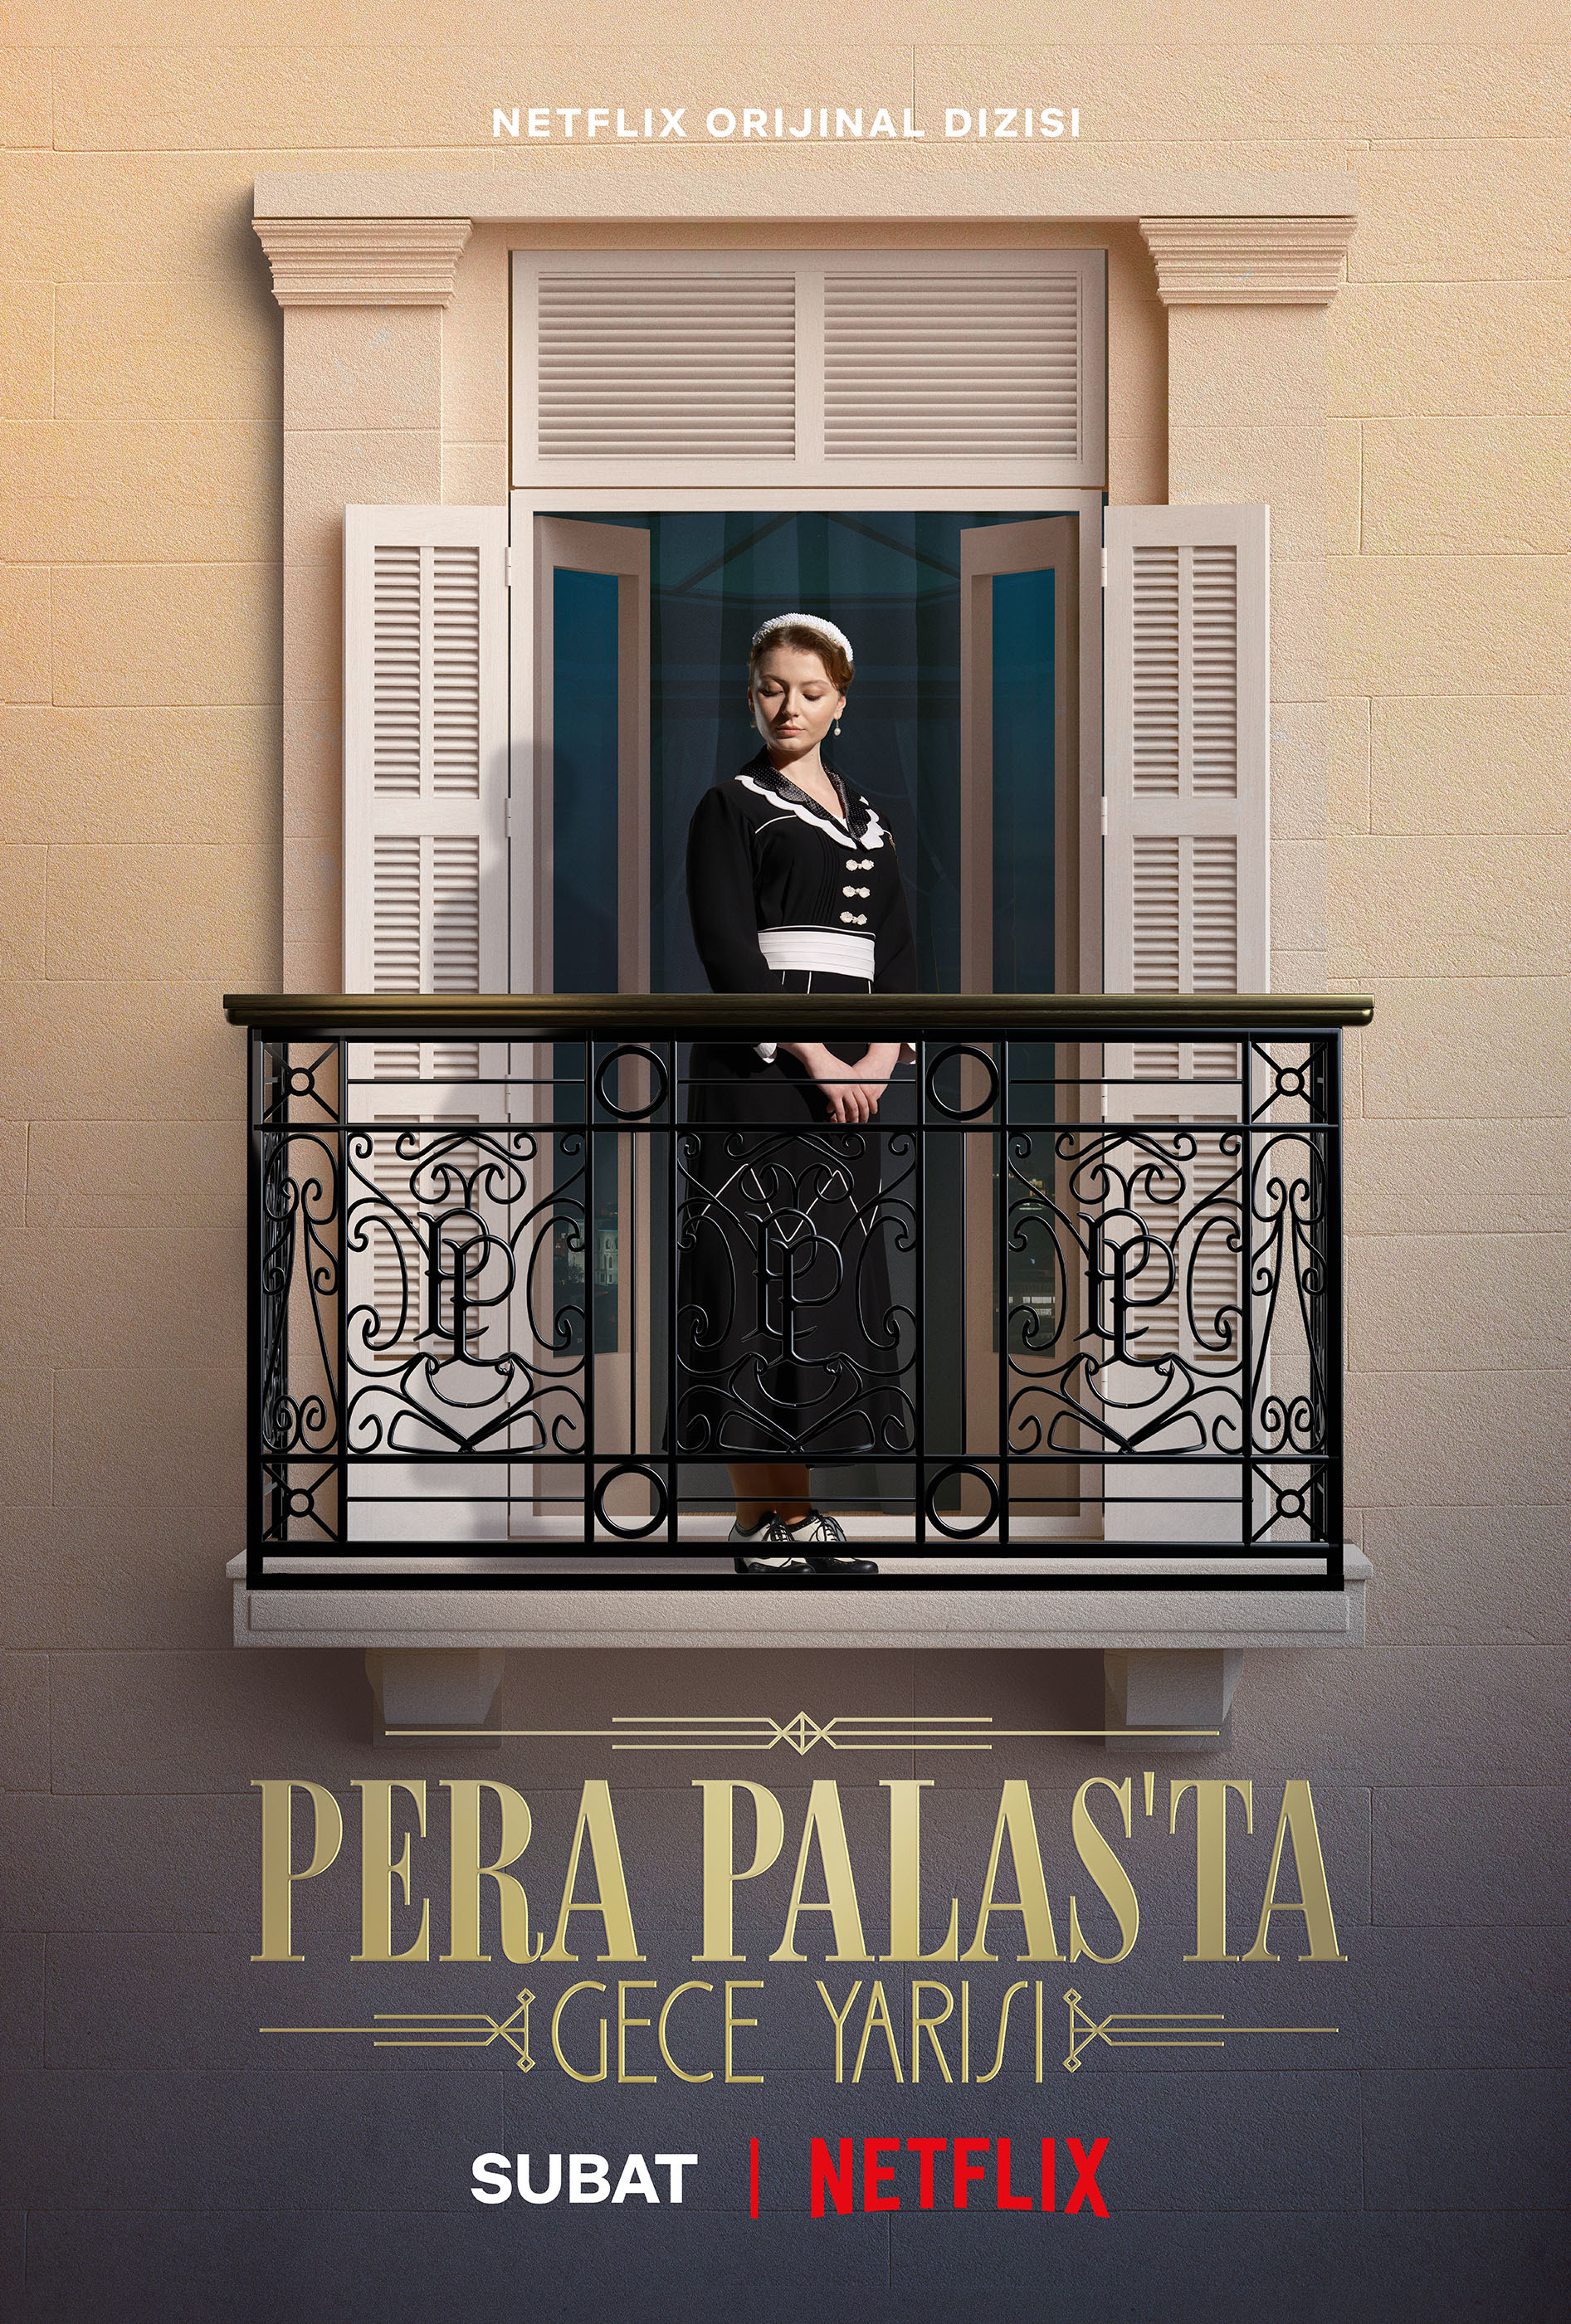 Mega Sized TV Poster Image for Pera Palas'ta Gece Yarisi (#10 of 10)